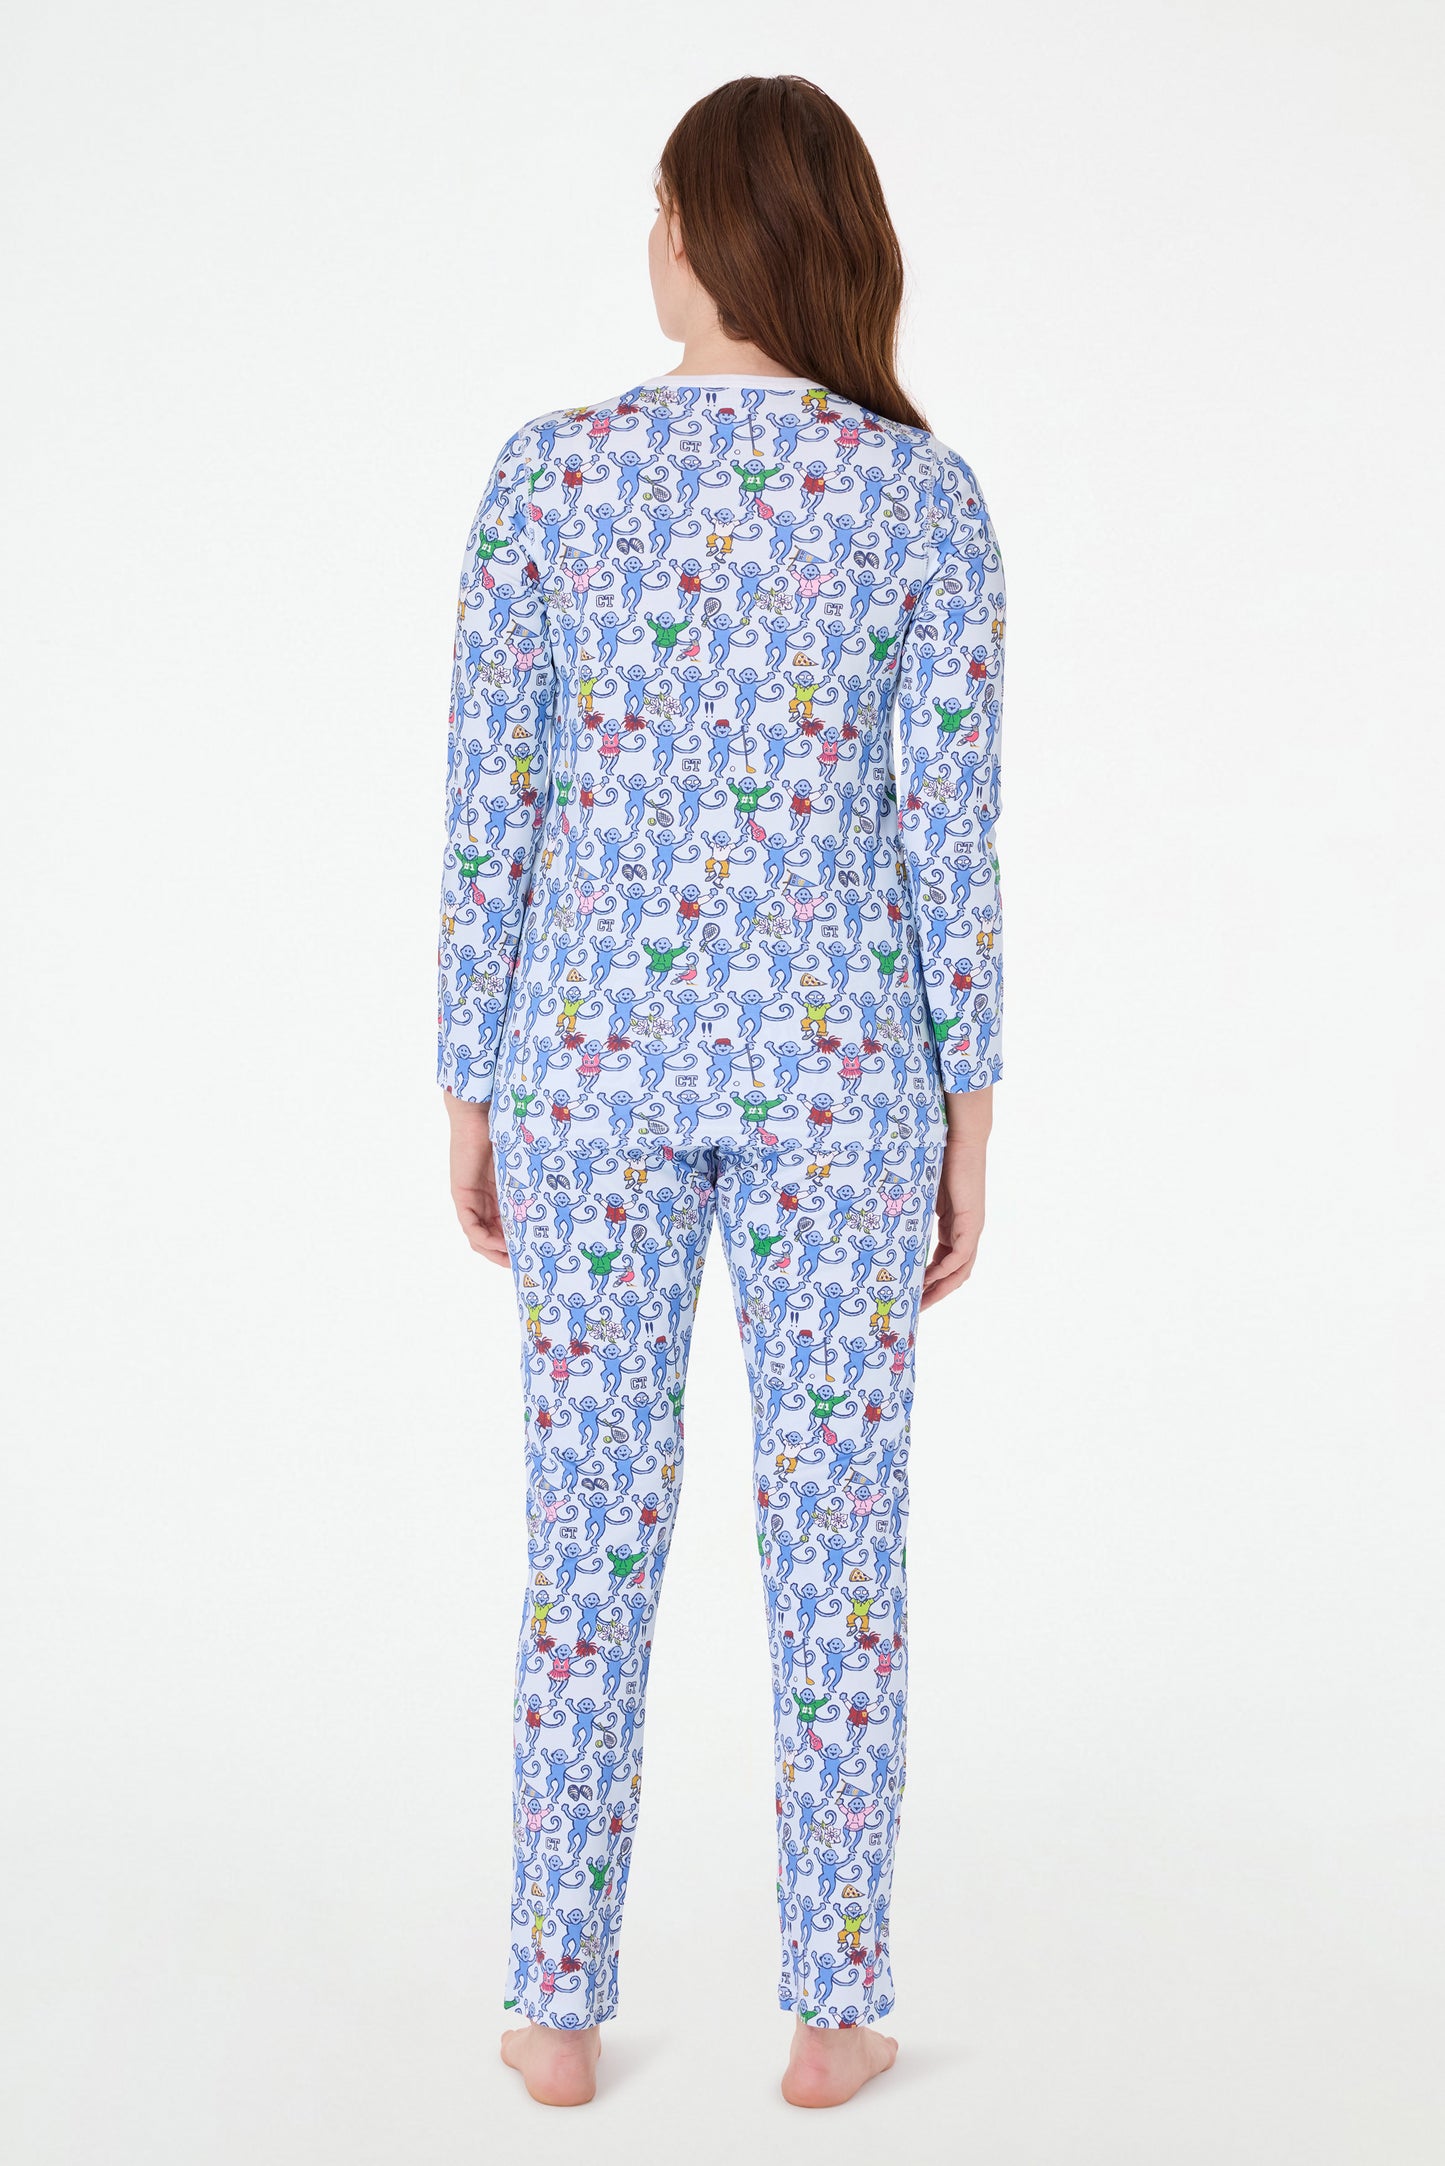 Roller Rabbit Greenwich Monkey Pajamas